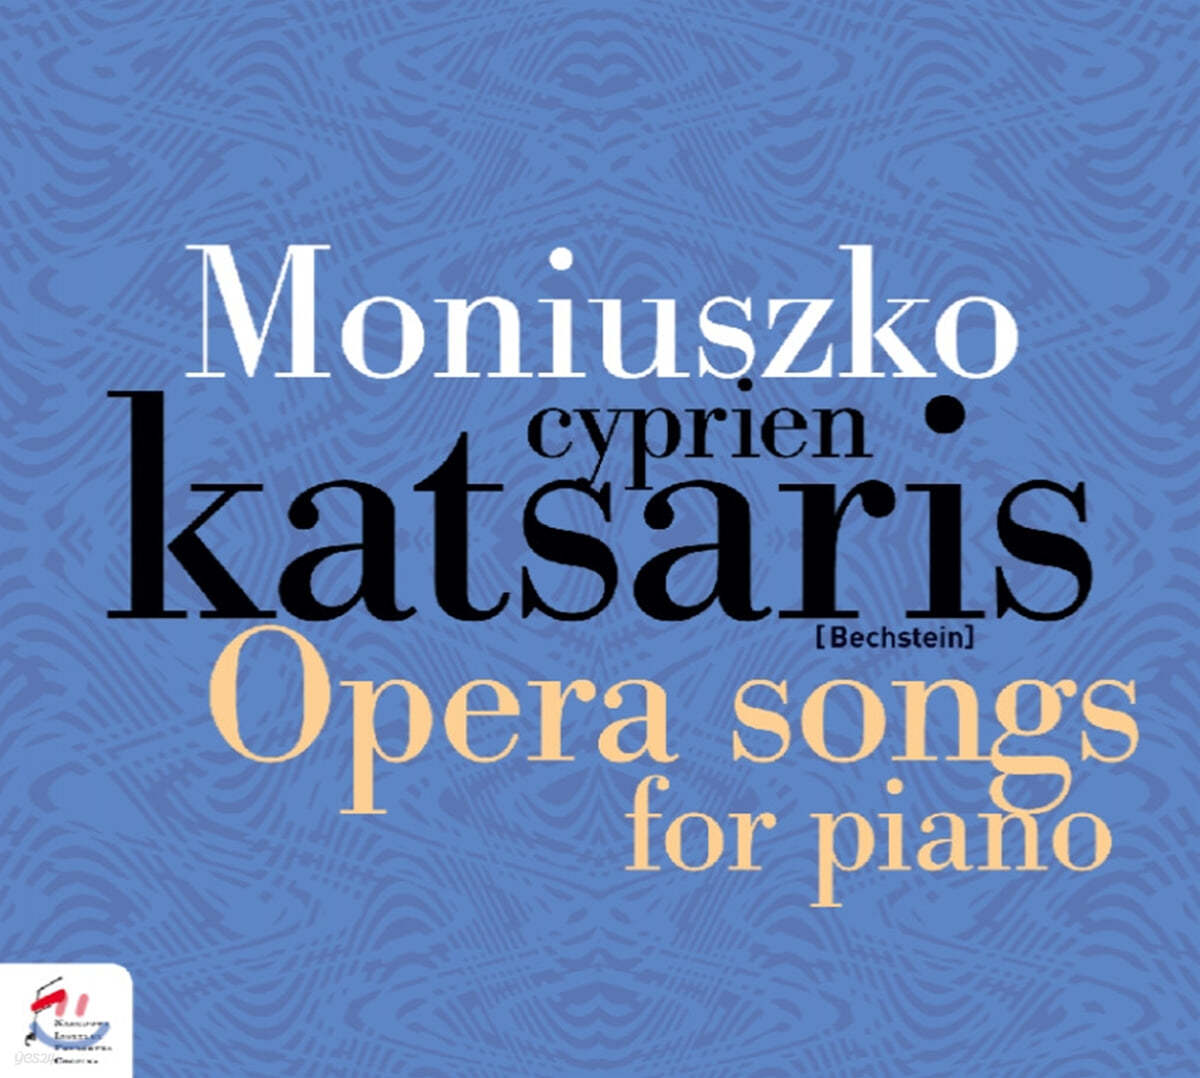 Cyprien Katsaris 모니우슈코: 피아노 독주로 편곡한 오페라 아리아와 소품집 (Moniuszko: Opera Songs for Piano, Piano Works) 